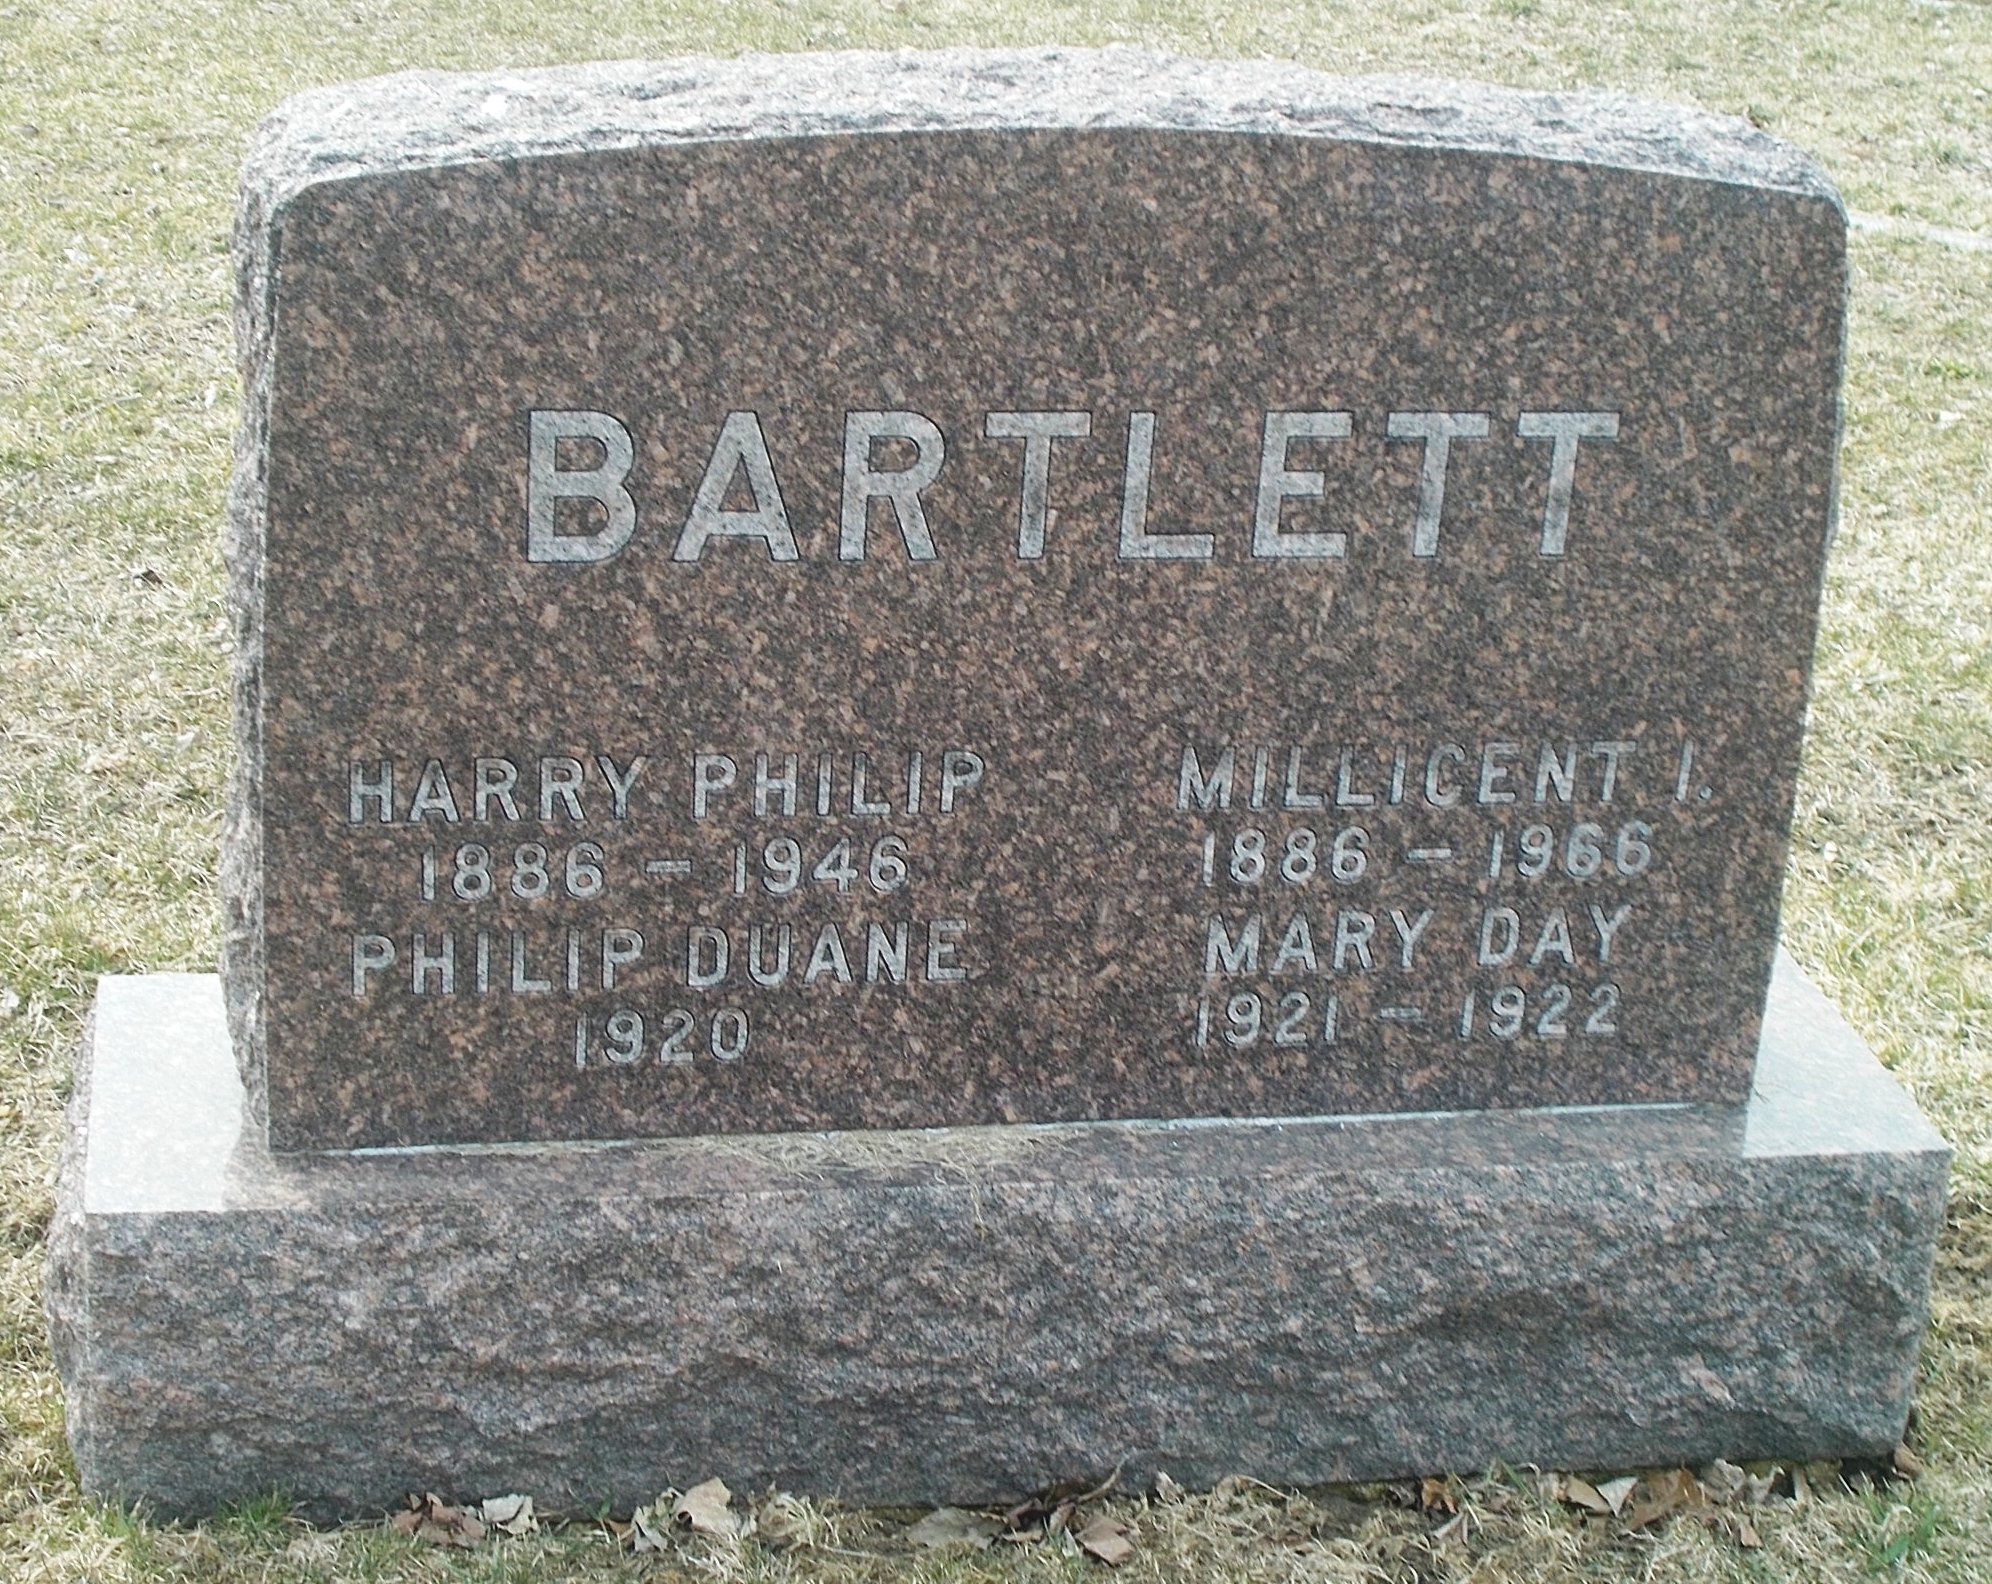 Harry Philip Bartlett